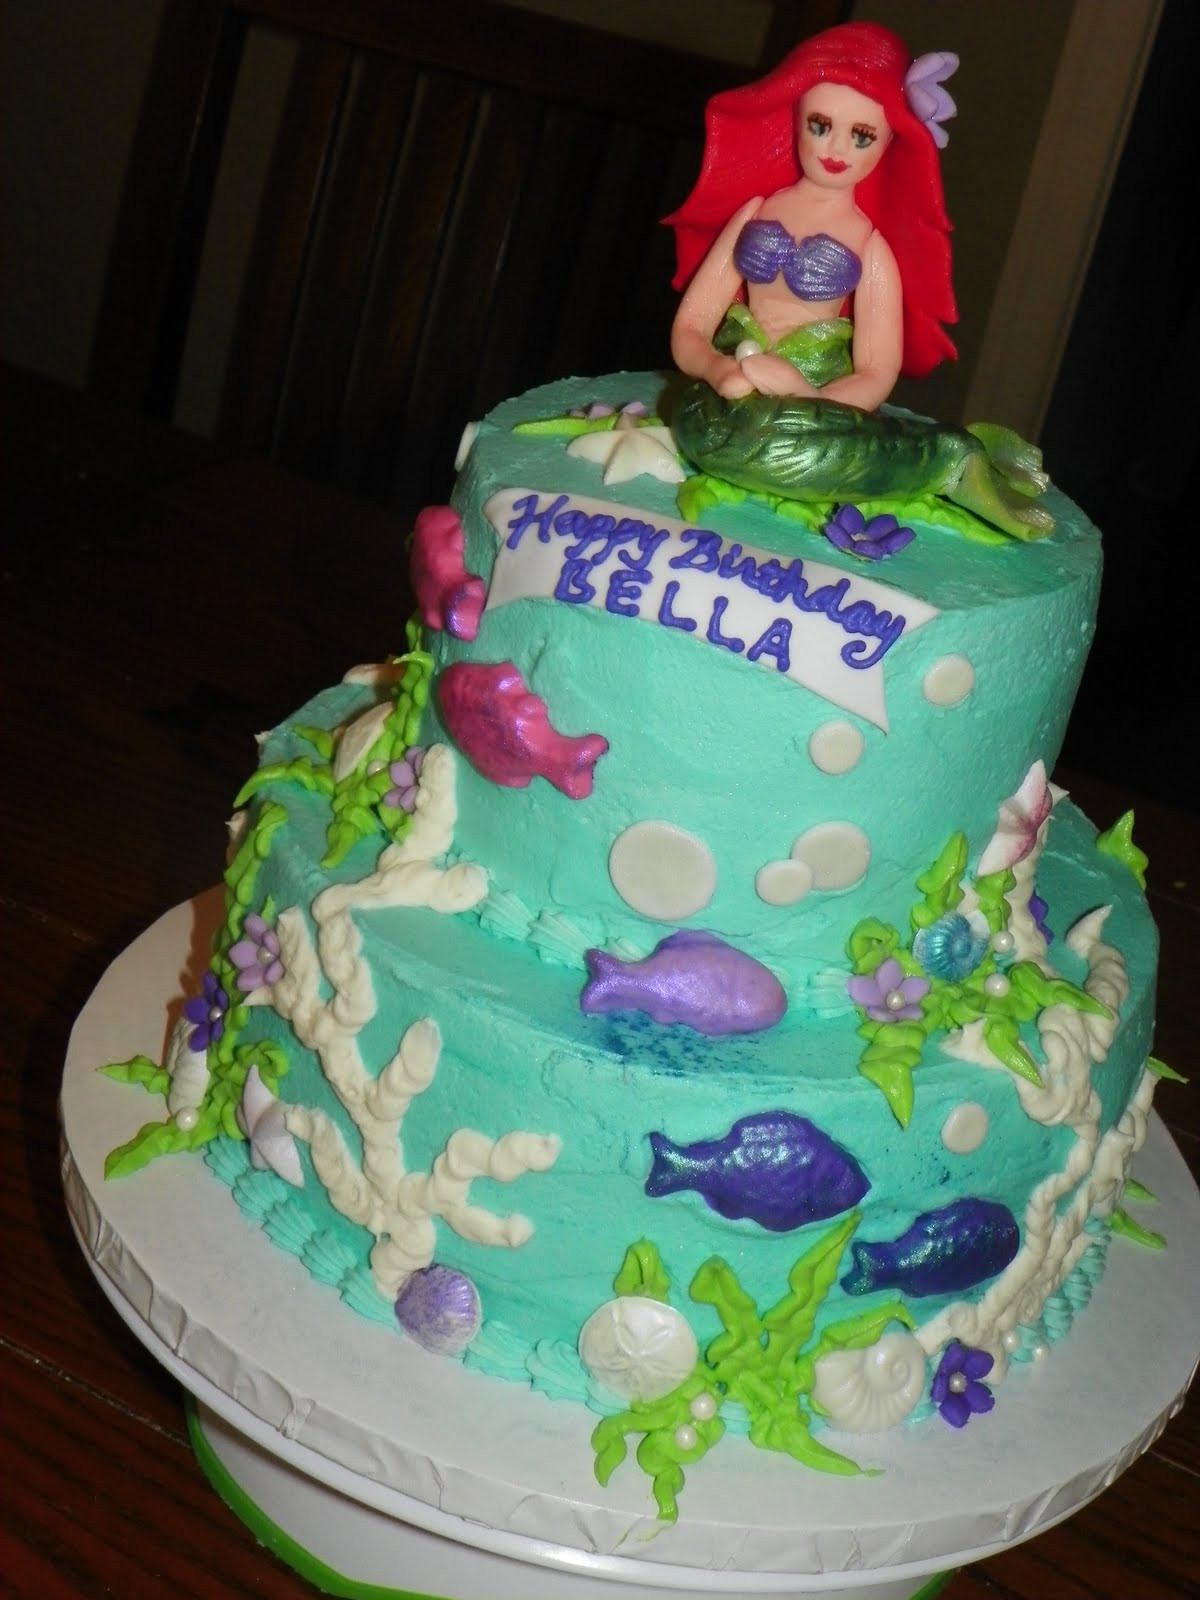 Best ideas about Ariel Birthday Cake
. Save or Pin Plumeria Cake Studio Ariel Little Mermaid Birthday Cake Now.